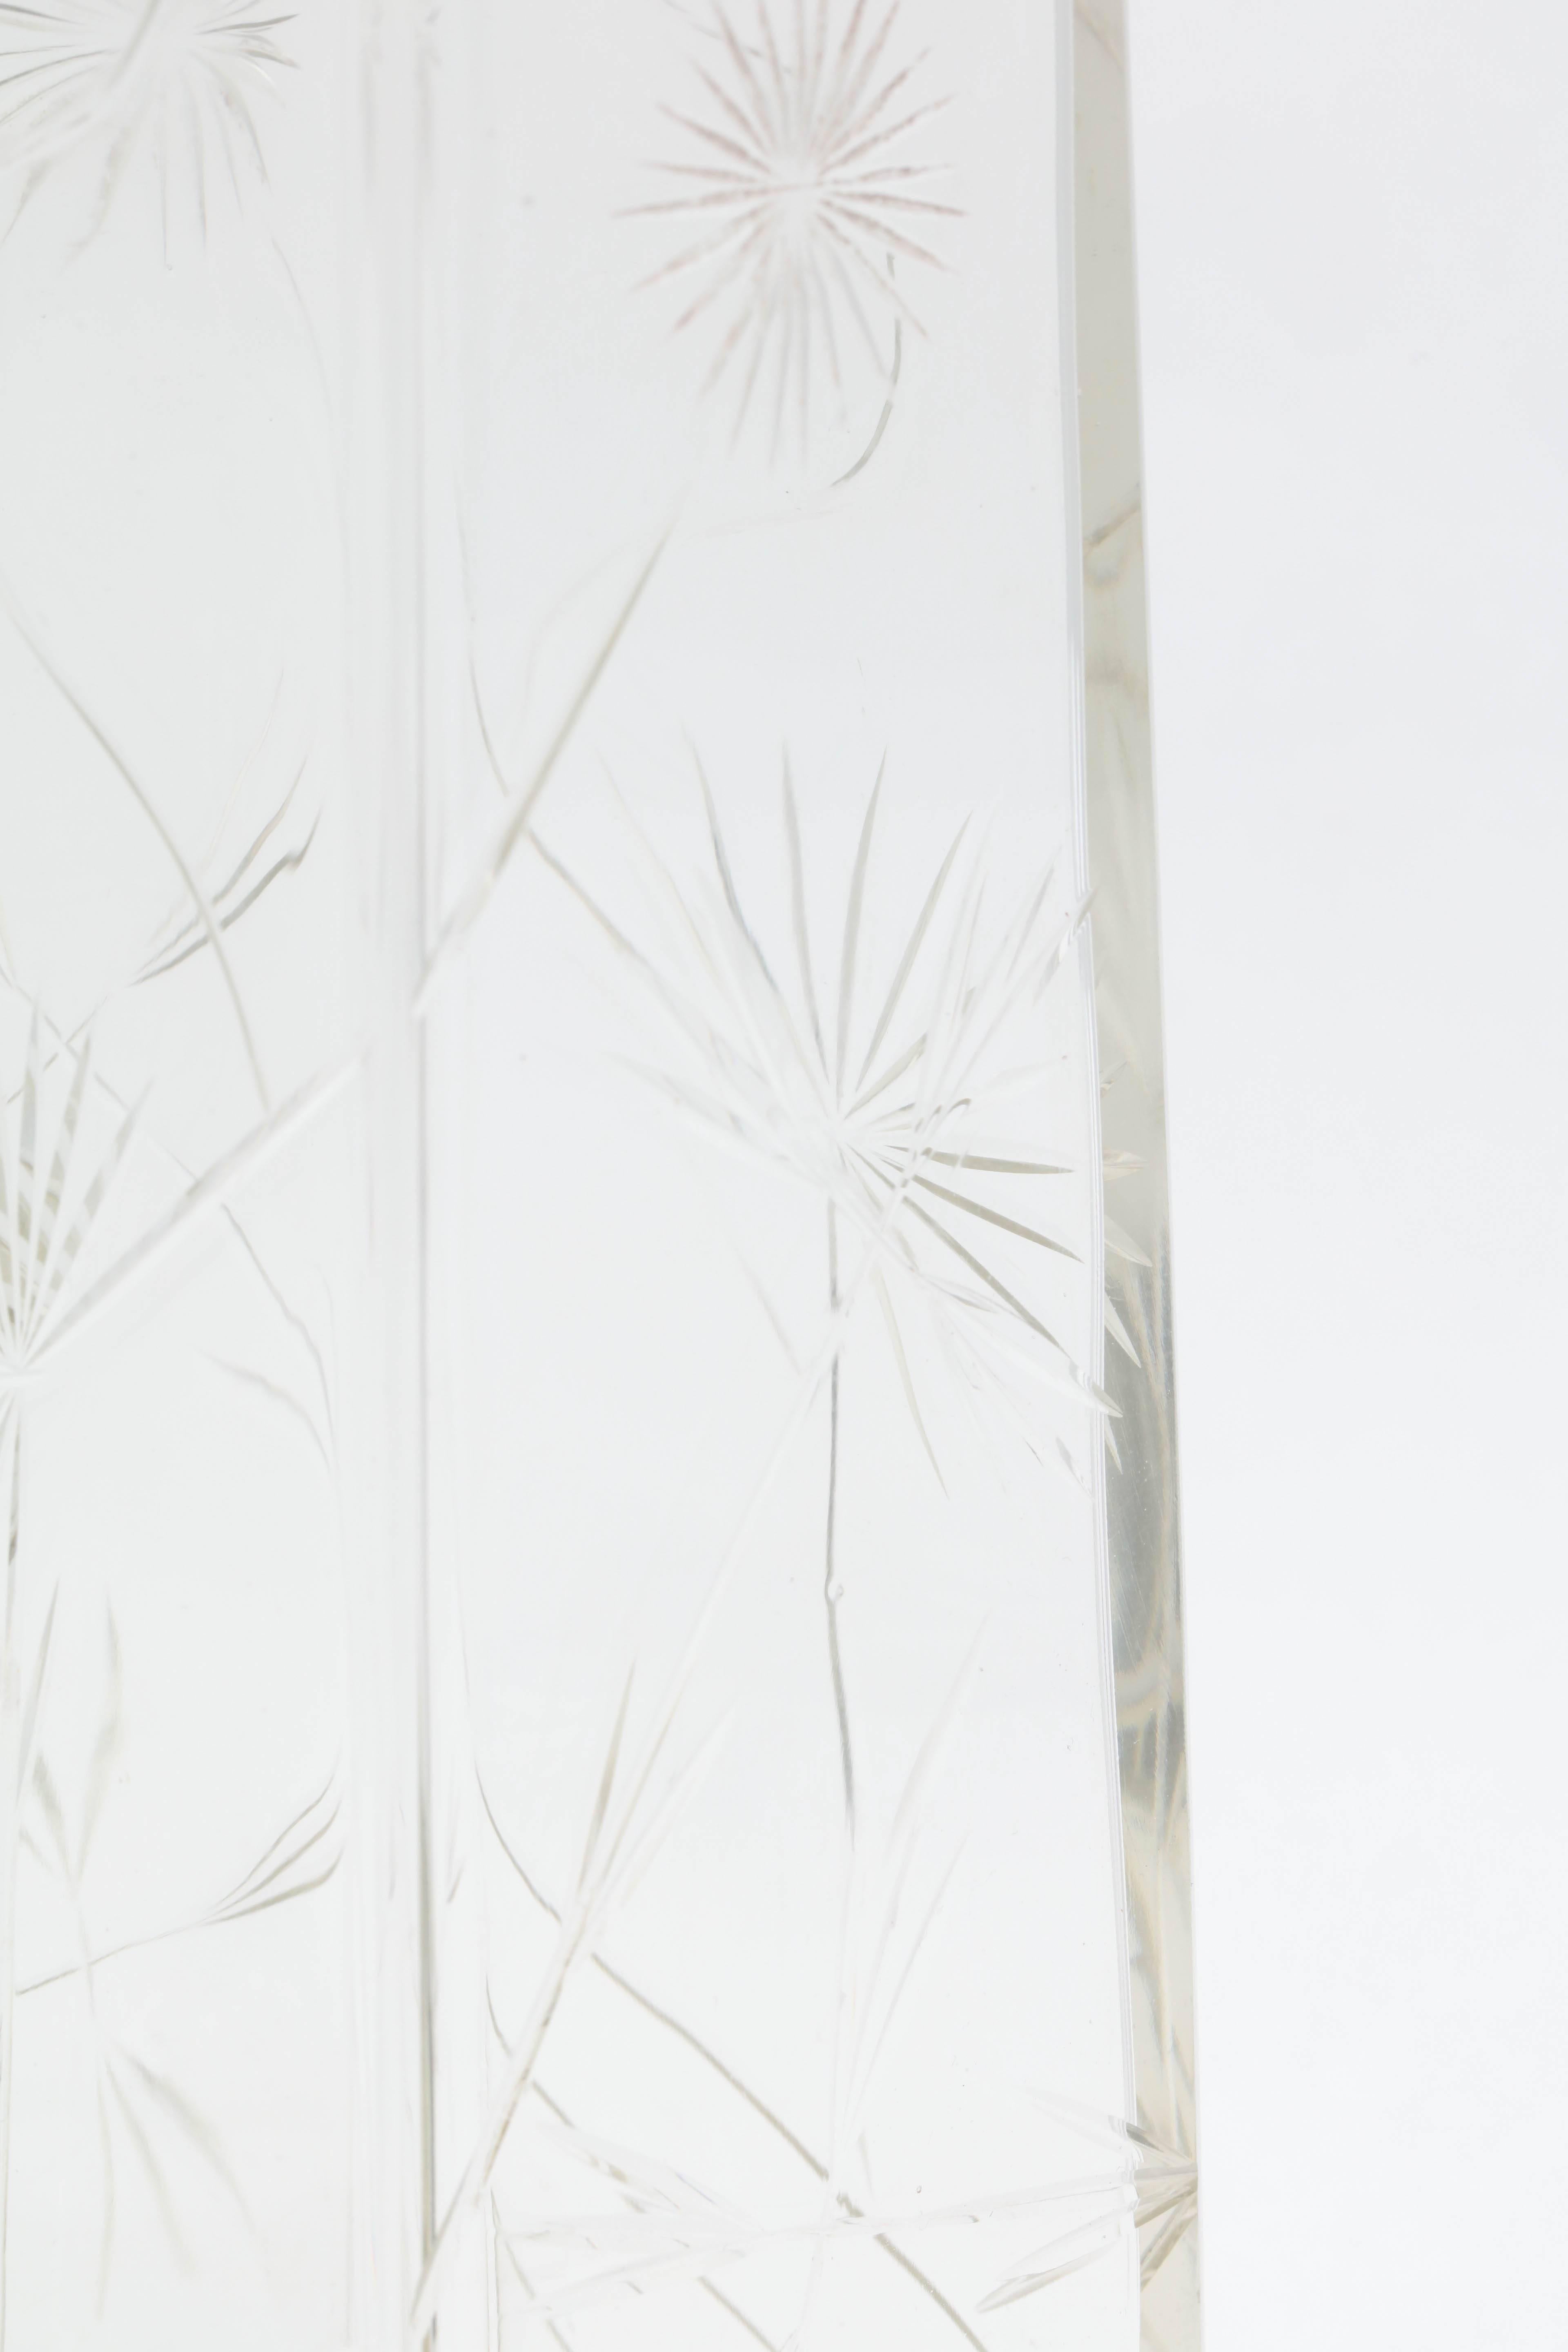 English Edwardian, Sterling Silver-Mounted Rectangular Japonesque Style Crystal Vase